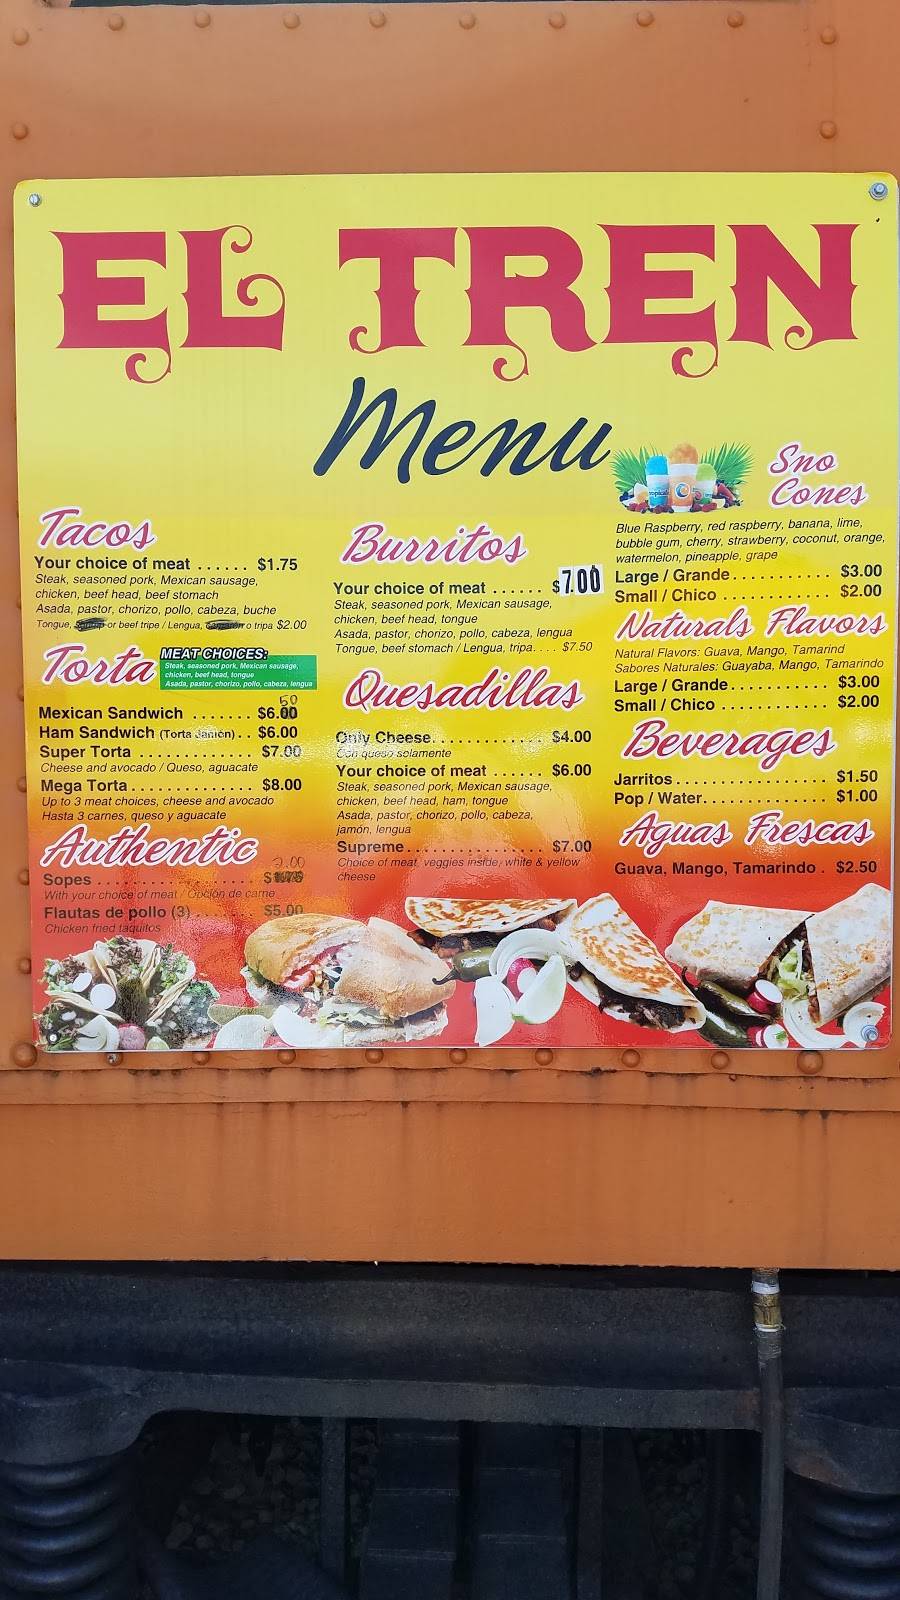 Tacos "El Tren" | restaurant | 1101 1st Ave, Perry, IA 50220, USA | 5154470888 OR +1 515-447-0888